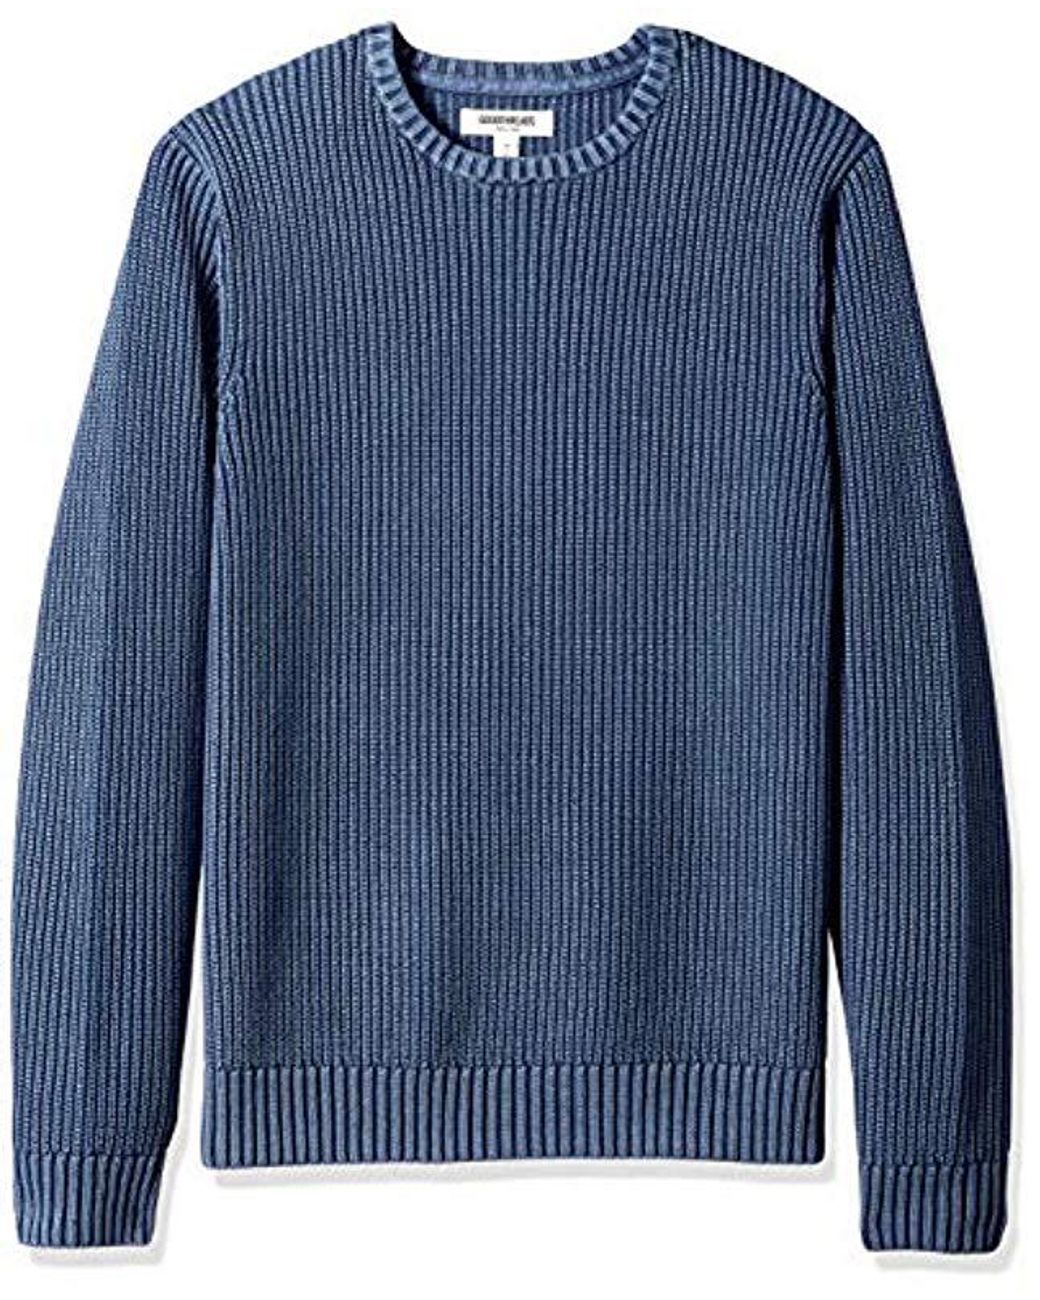 Goodthreads Amazon Brand - Soft Cotton Rib Stitch Crewneck Sweater in ...